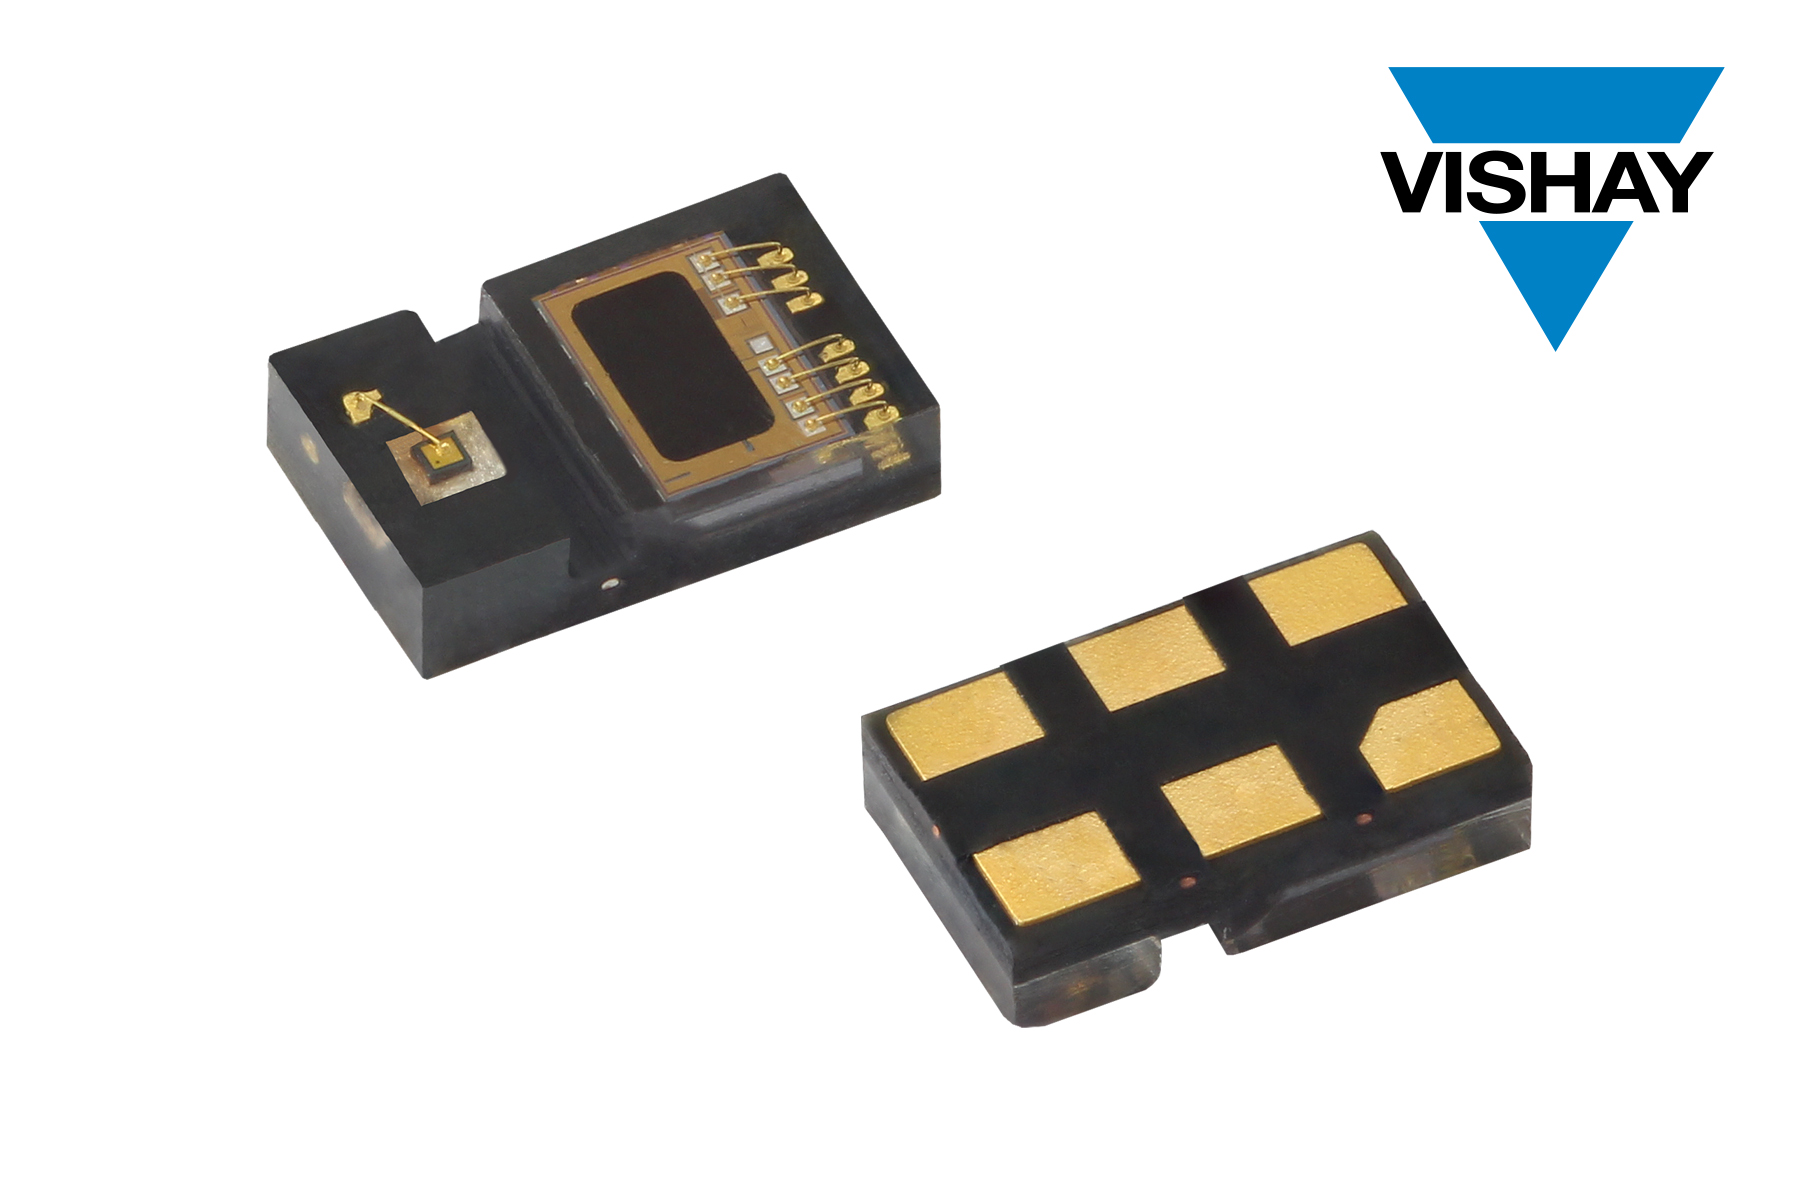 Vishay’s New Proximity Sensor Offers Power Consumption Down to 6.63 µA